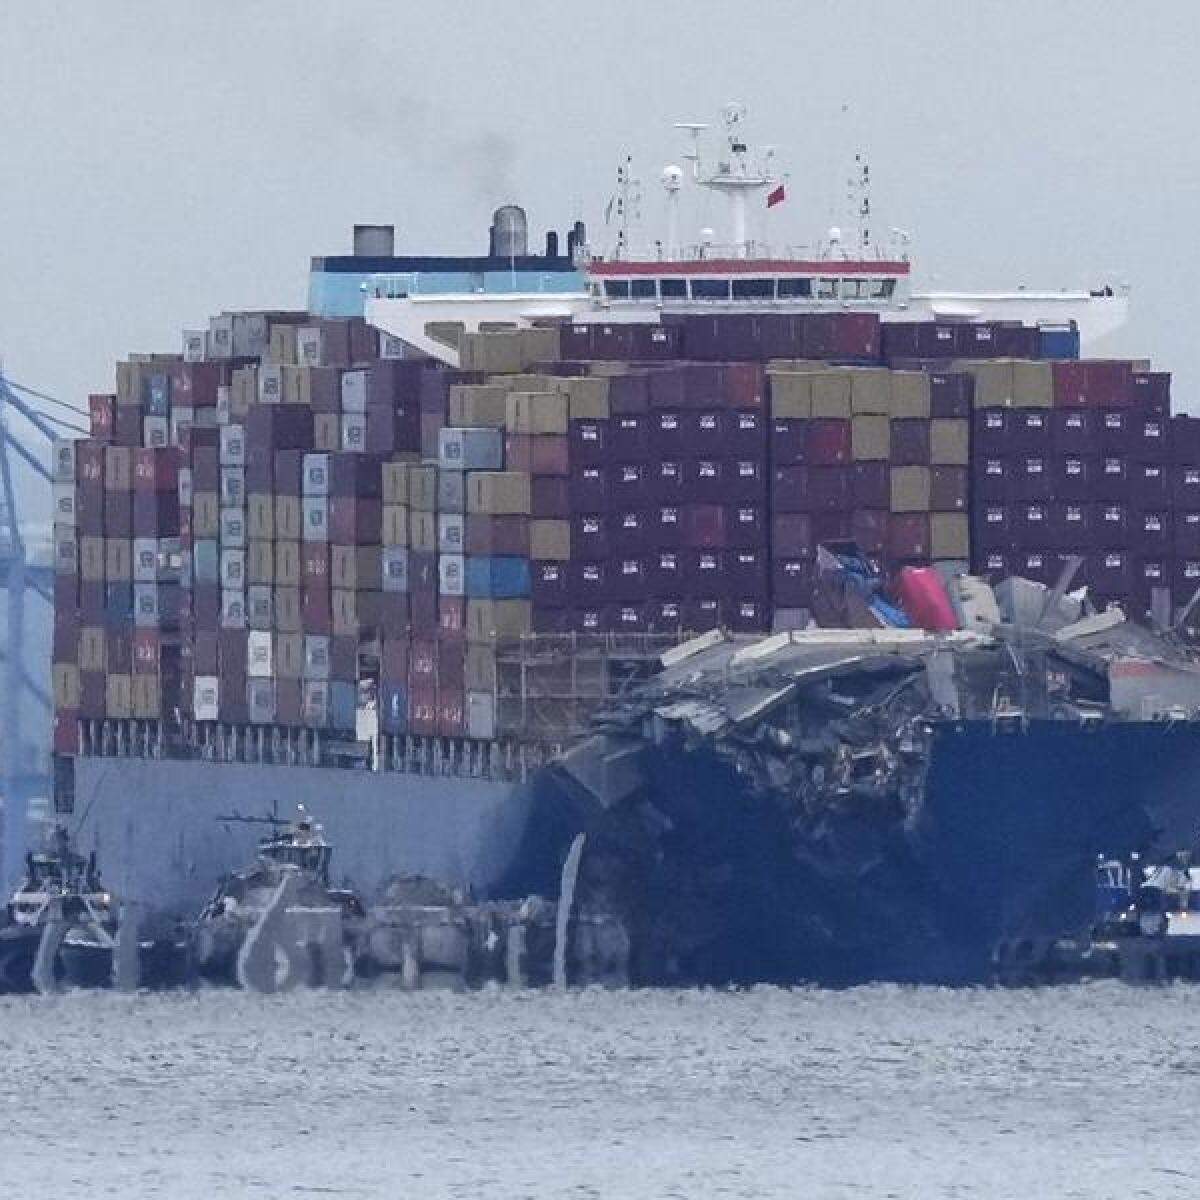 Crews work to move the cargo ship Dali in Baltimore, Monday